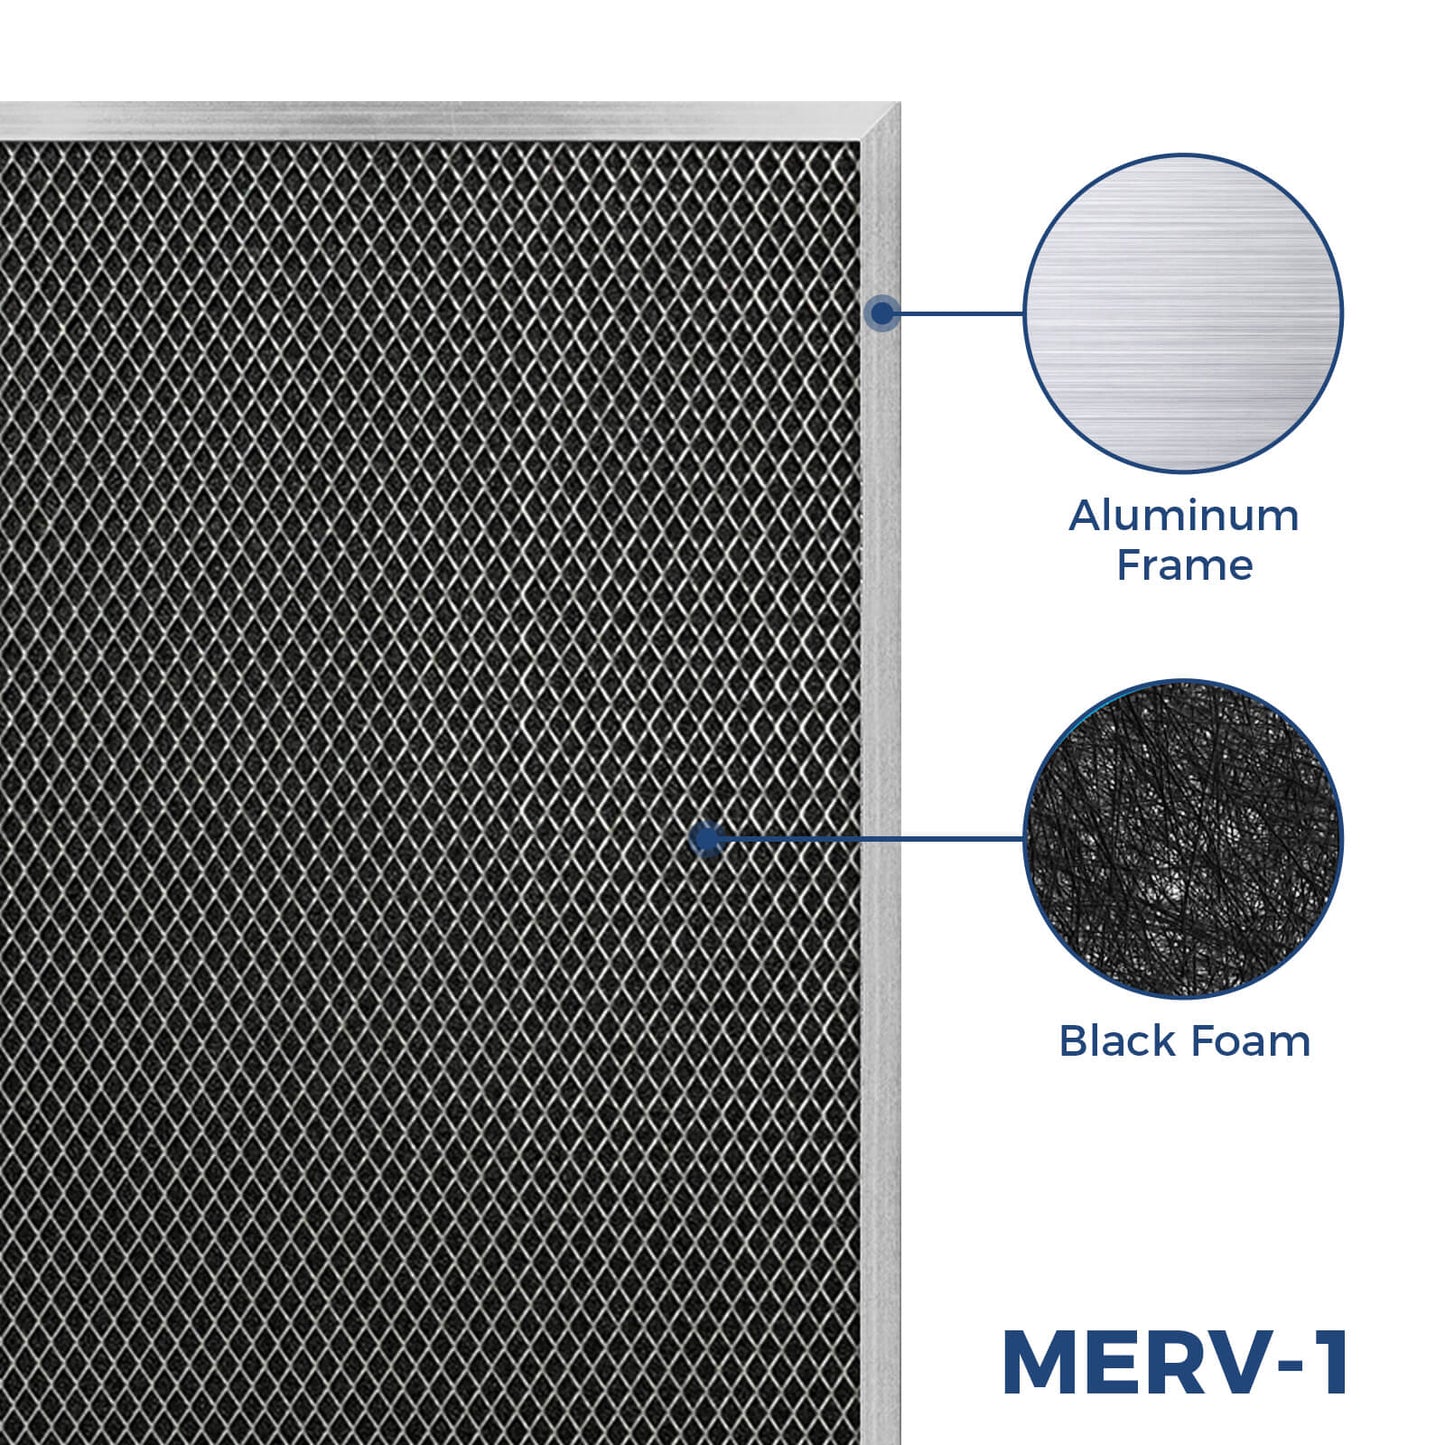 AlorAir® 3-Pack MERV-1 Filter for Commercial Dehumidifier Sentinel SLGR 1400X PARTS OF CANADA LTD